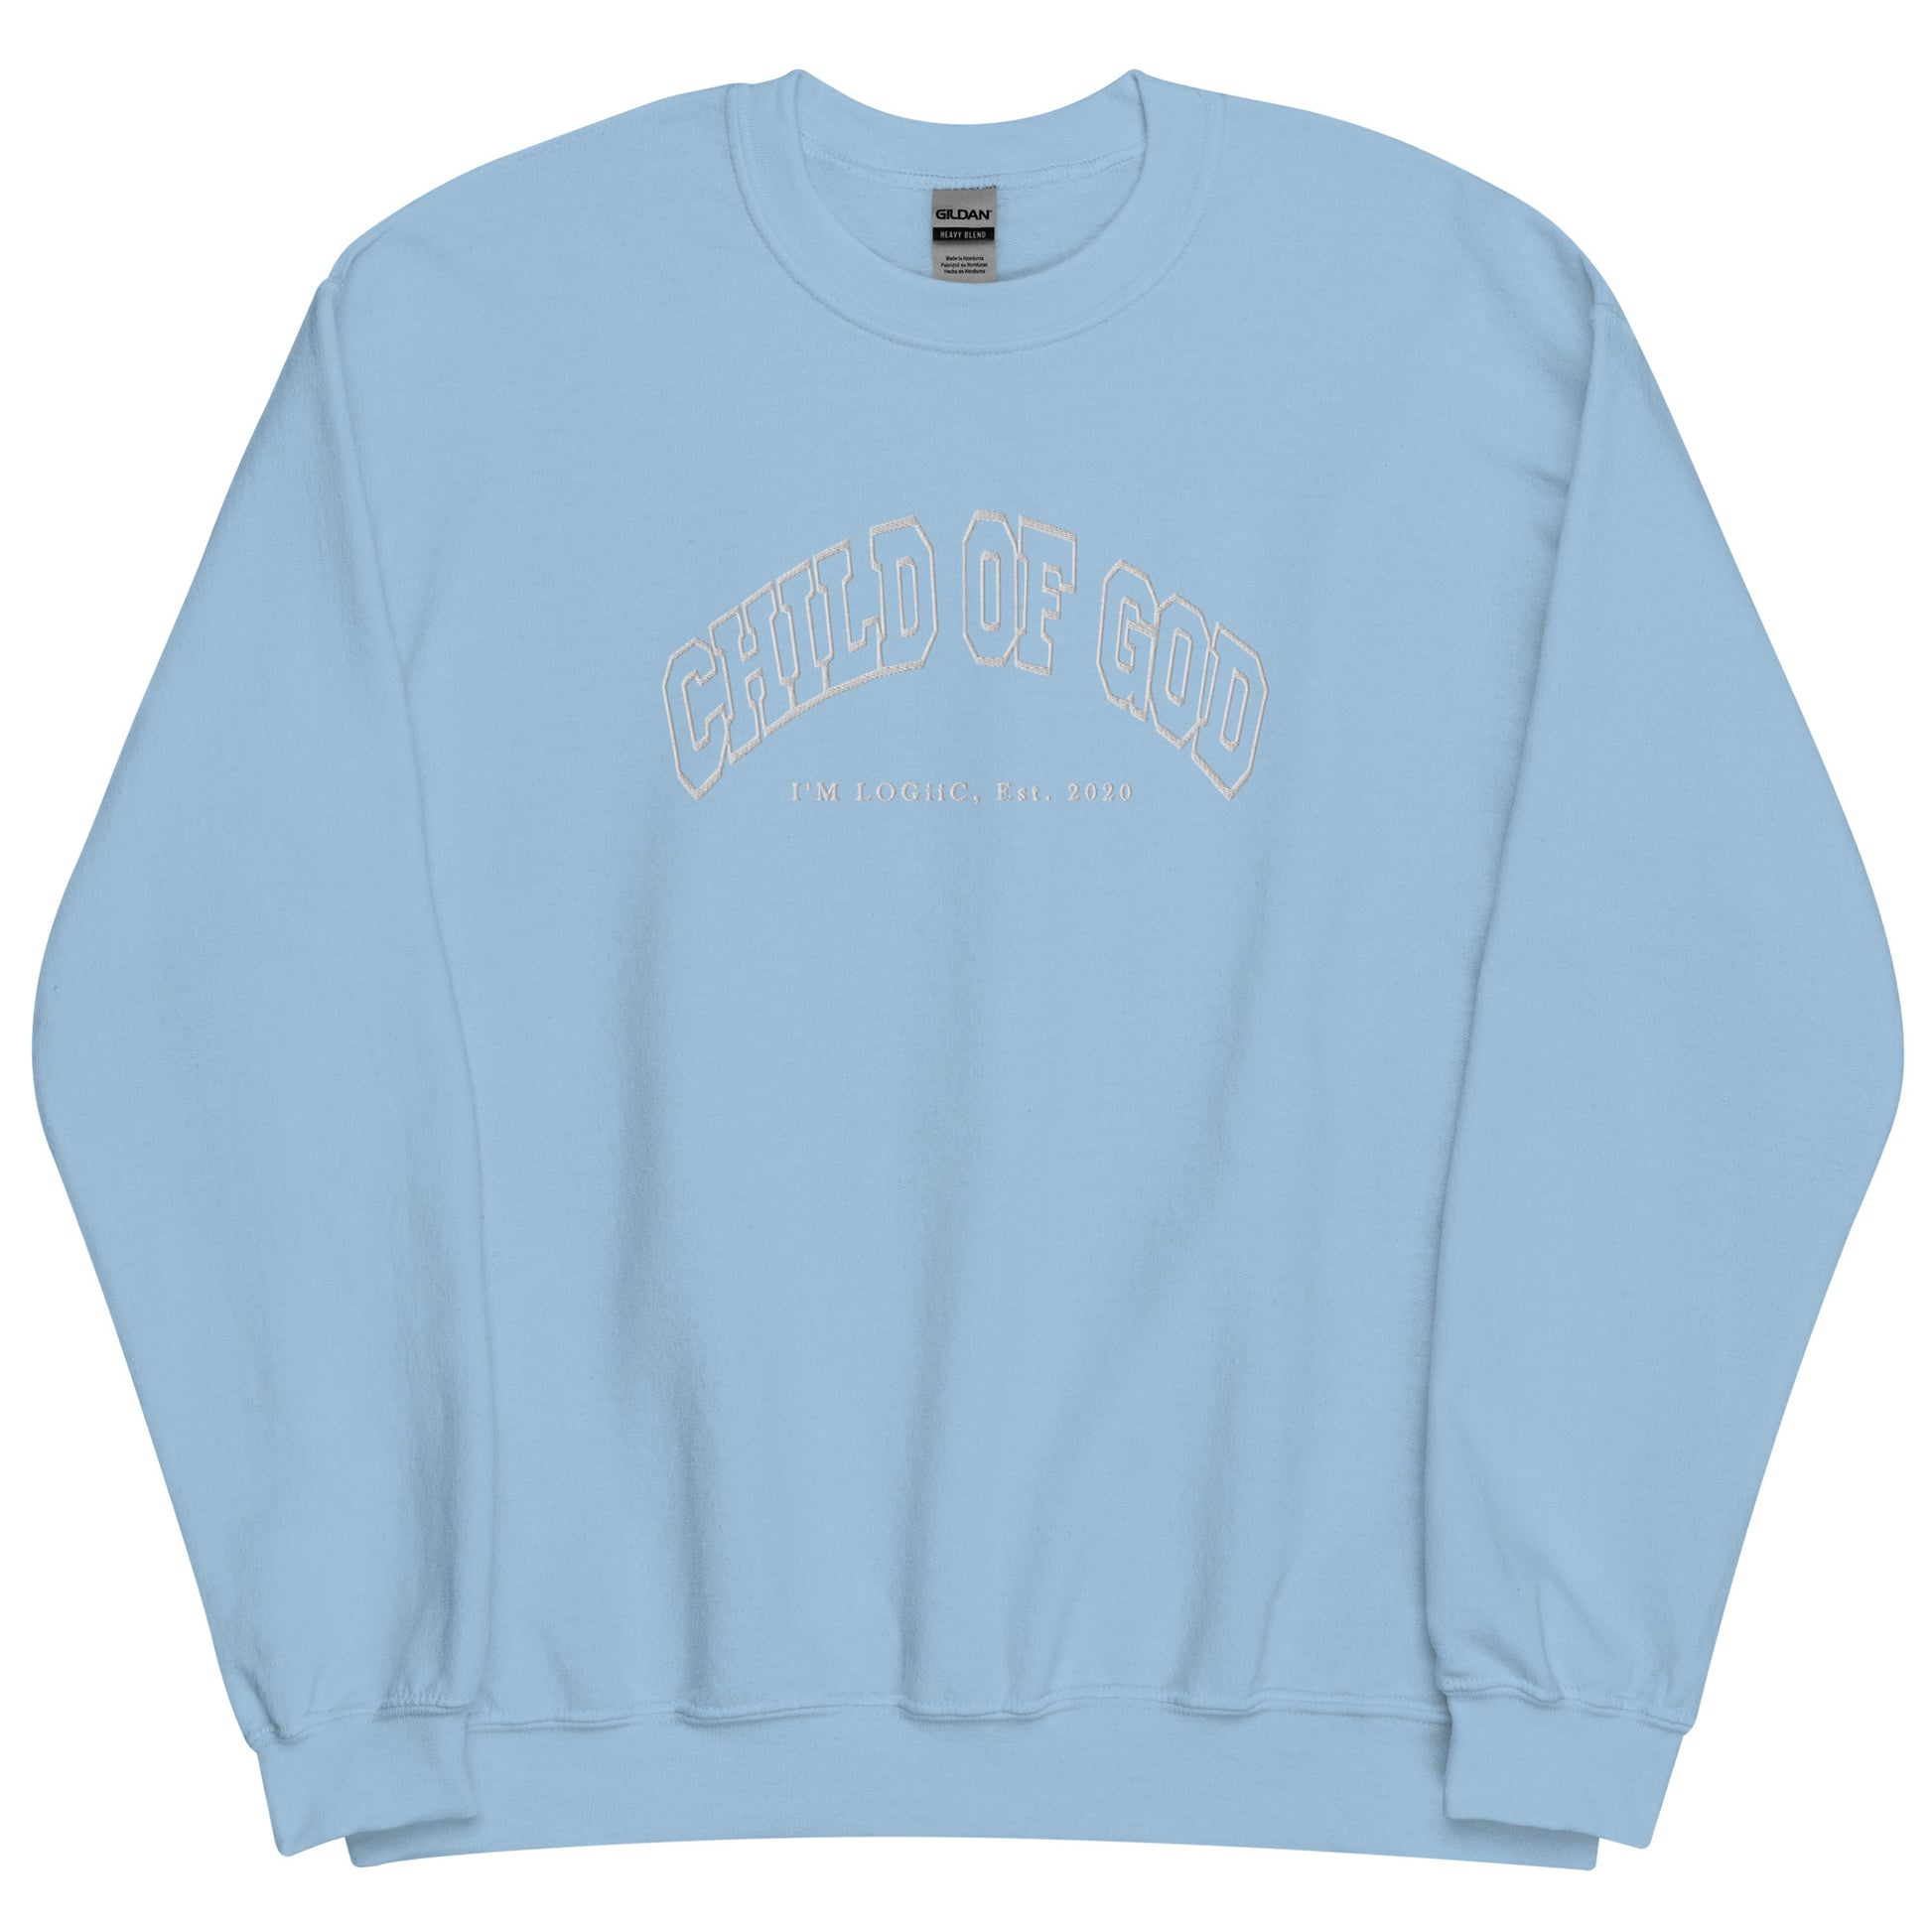 Child of God Unisex Sweatshirt - Light Blue / S